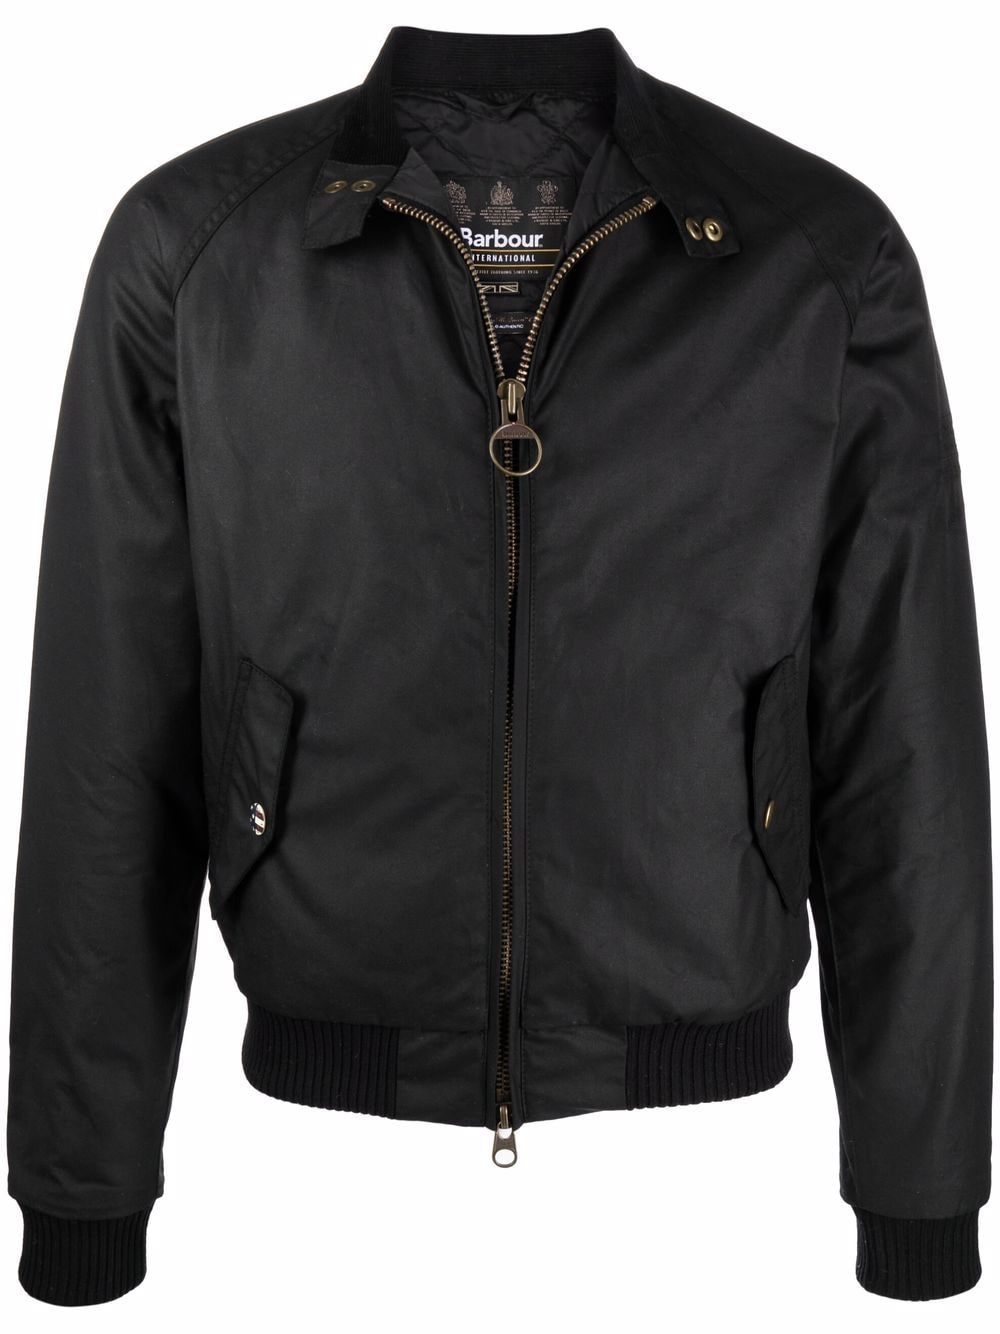 Steve McQueen black jacket